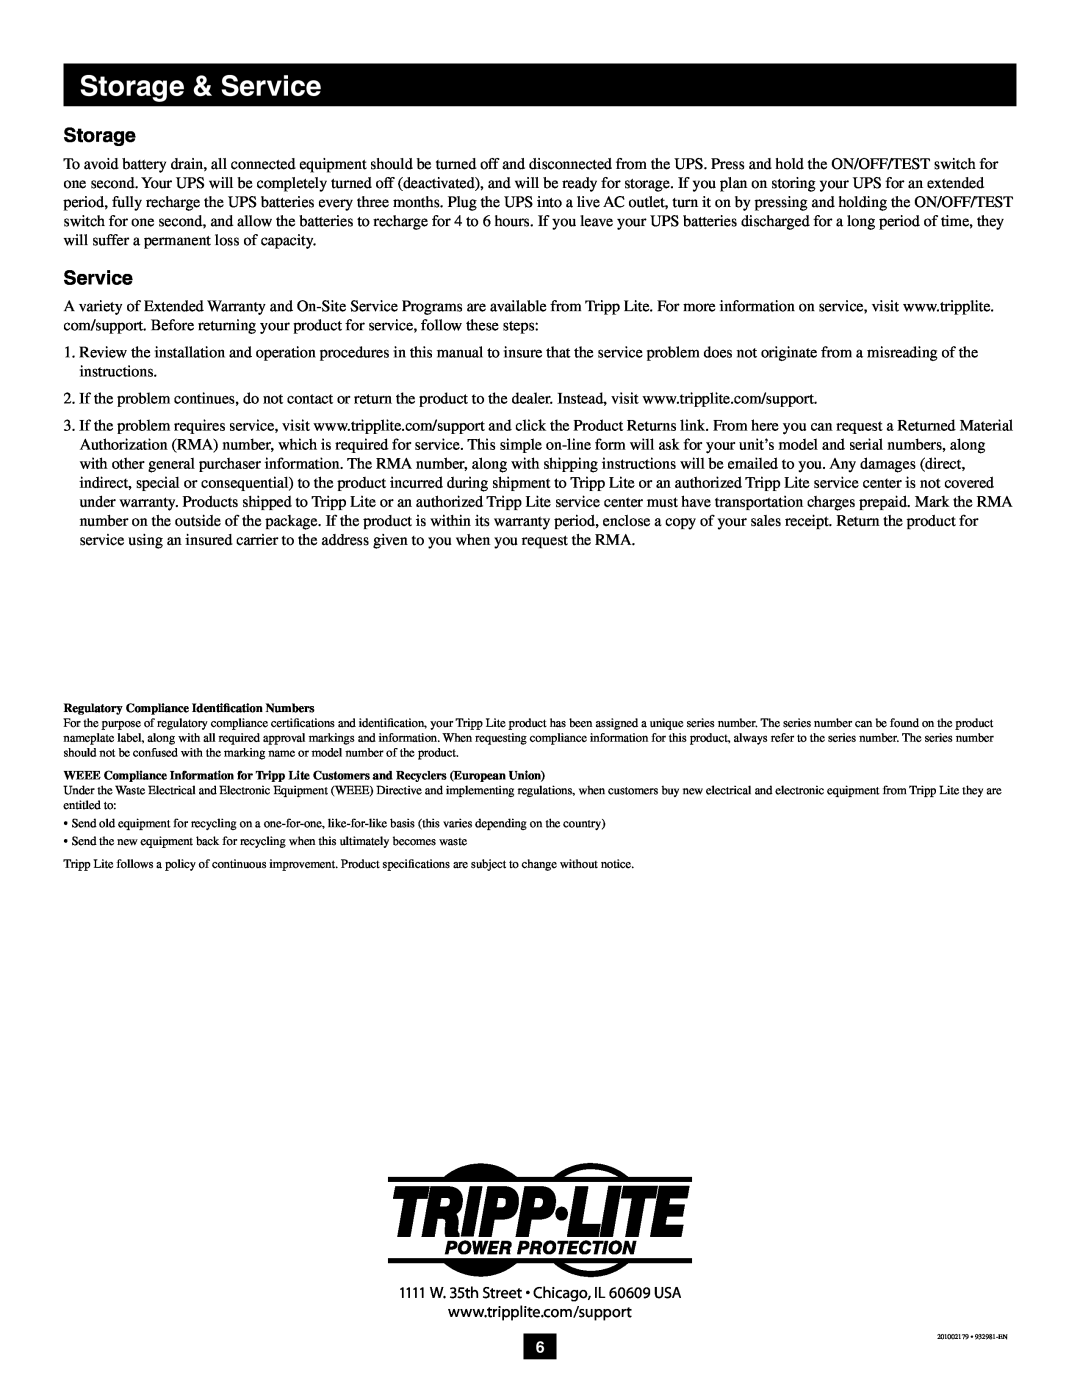 Tripp Lite AVRX750U, AVRX550U owner manual Storage & Service, Regulatory Compliance Identification Numbers 